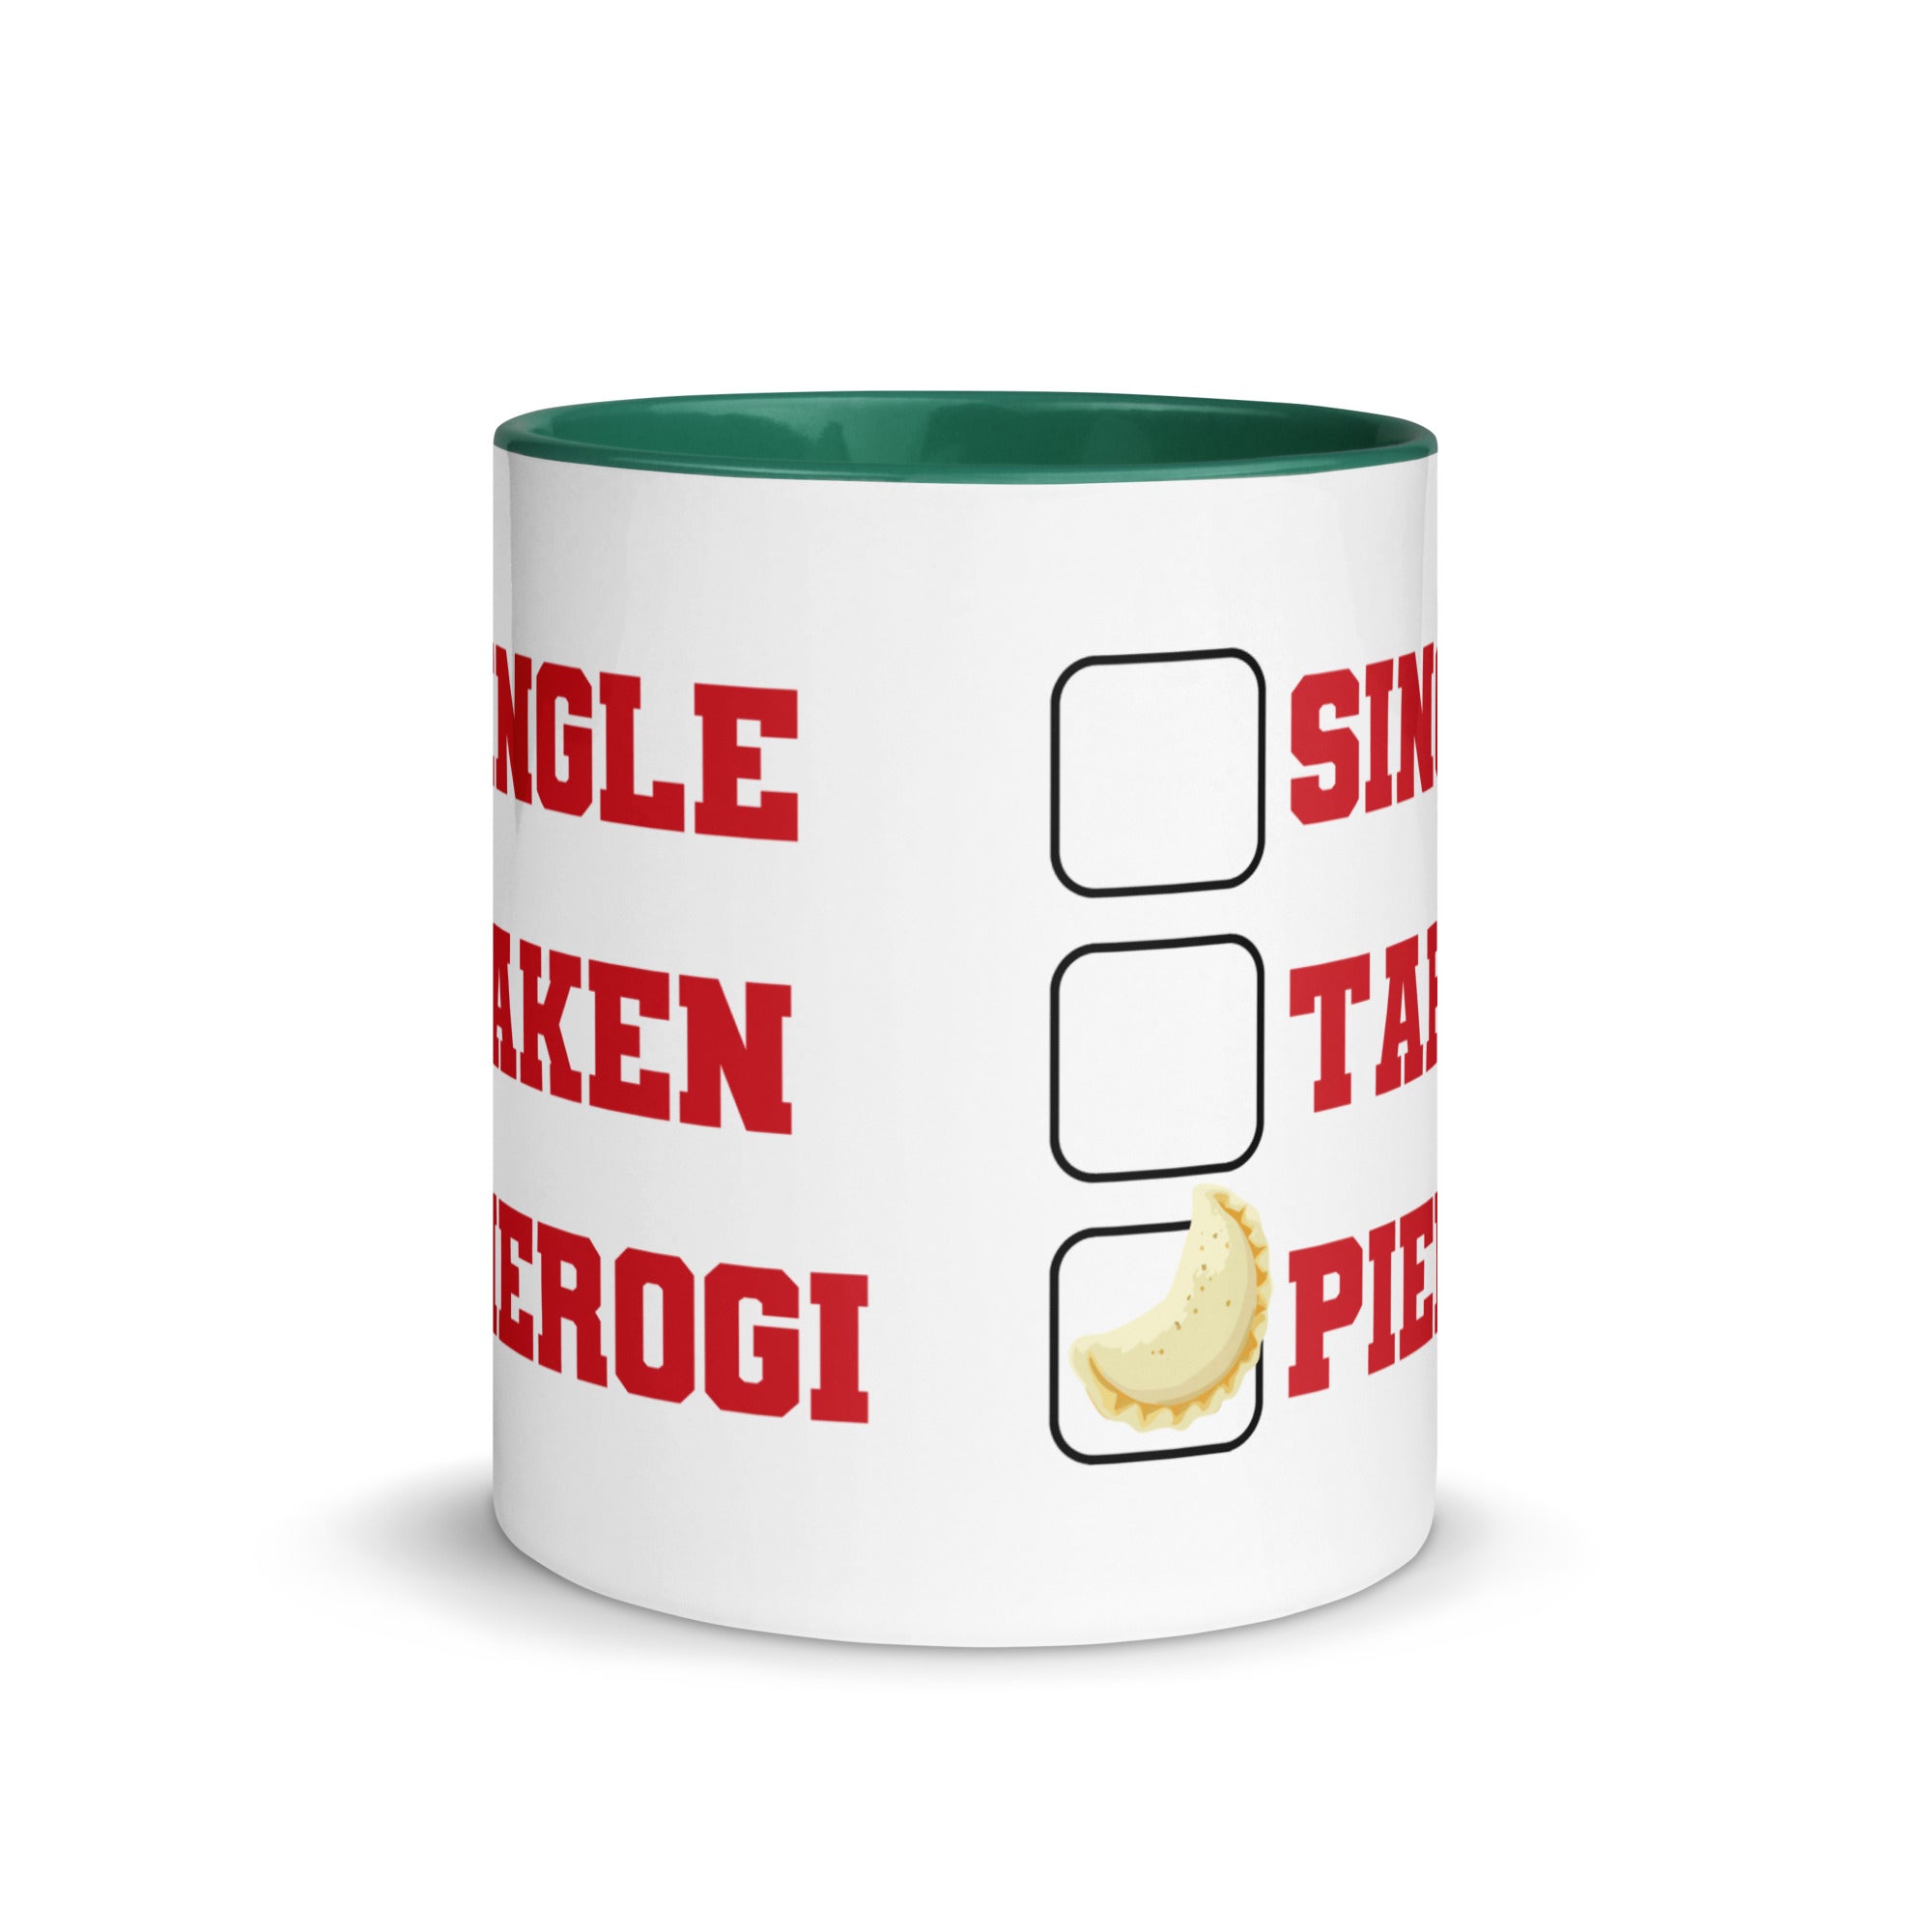 Single Taken Pierogi Mug with Color Inside  Polish Shirt Store   